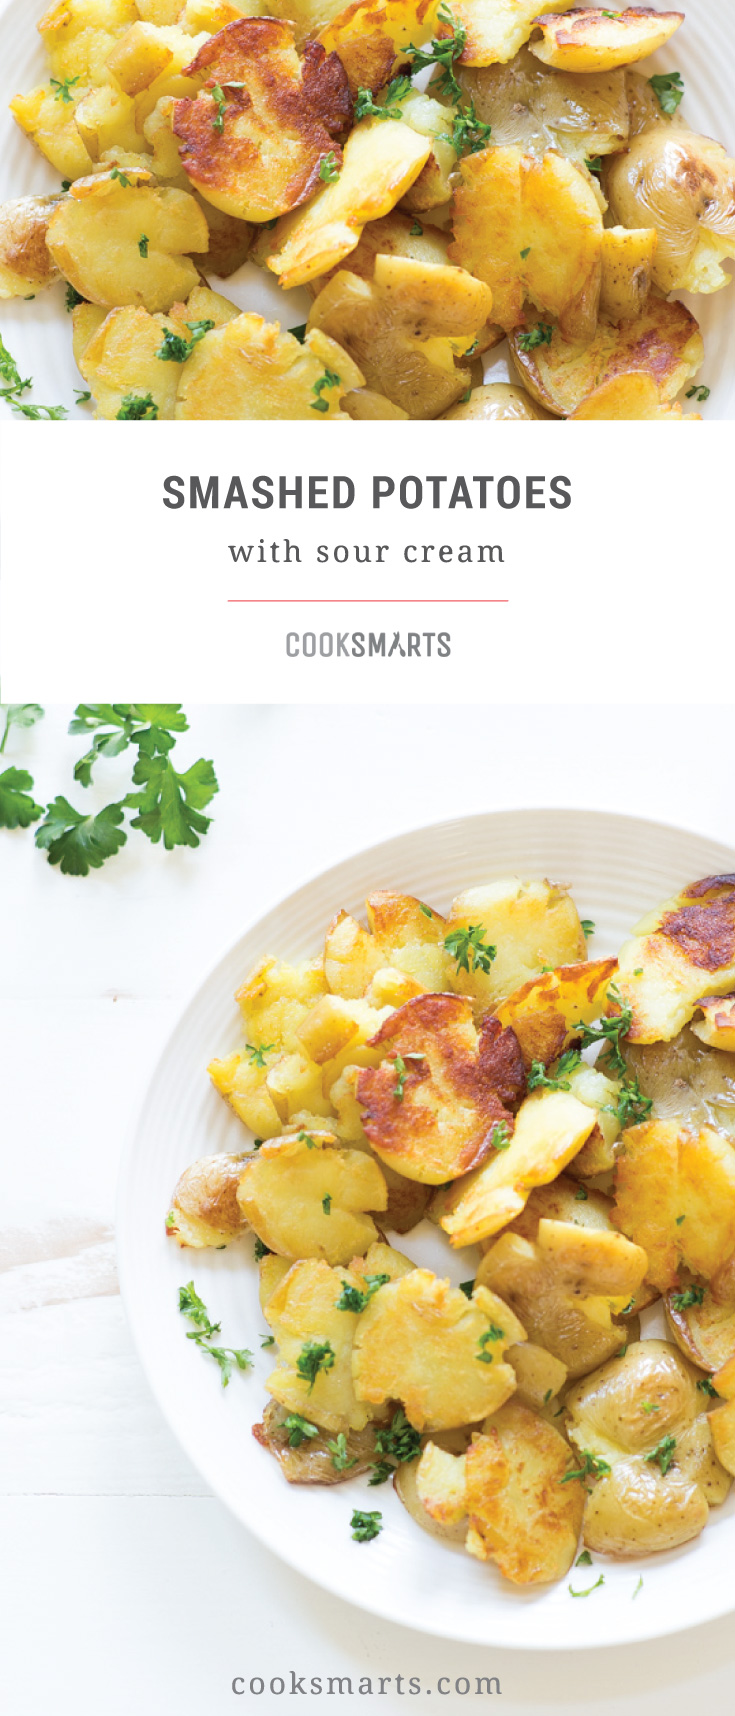 Cook Smarts Recipe: Smashed Potatoes